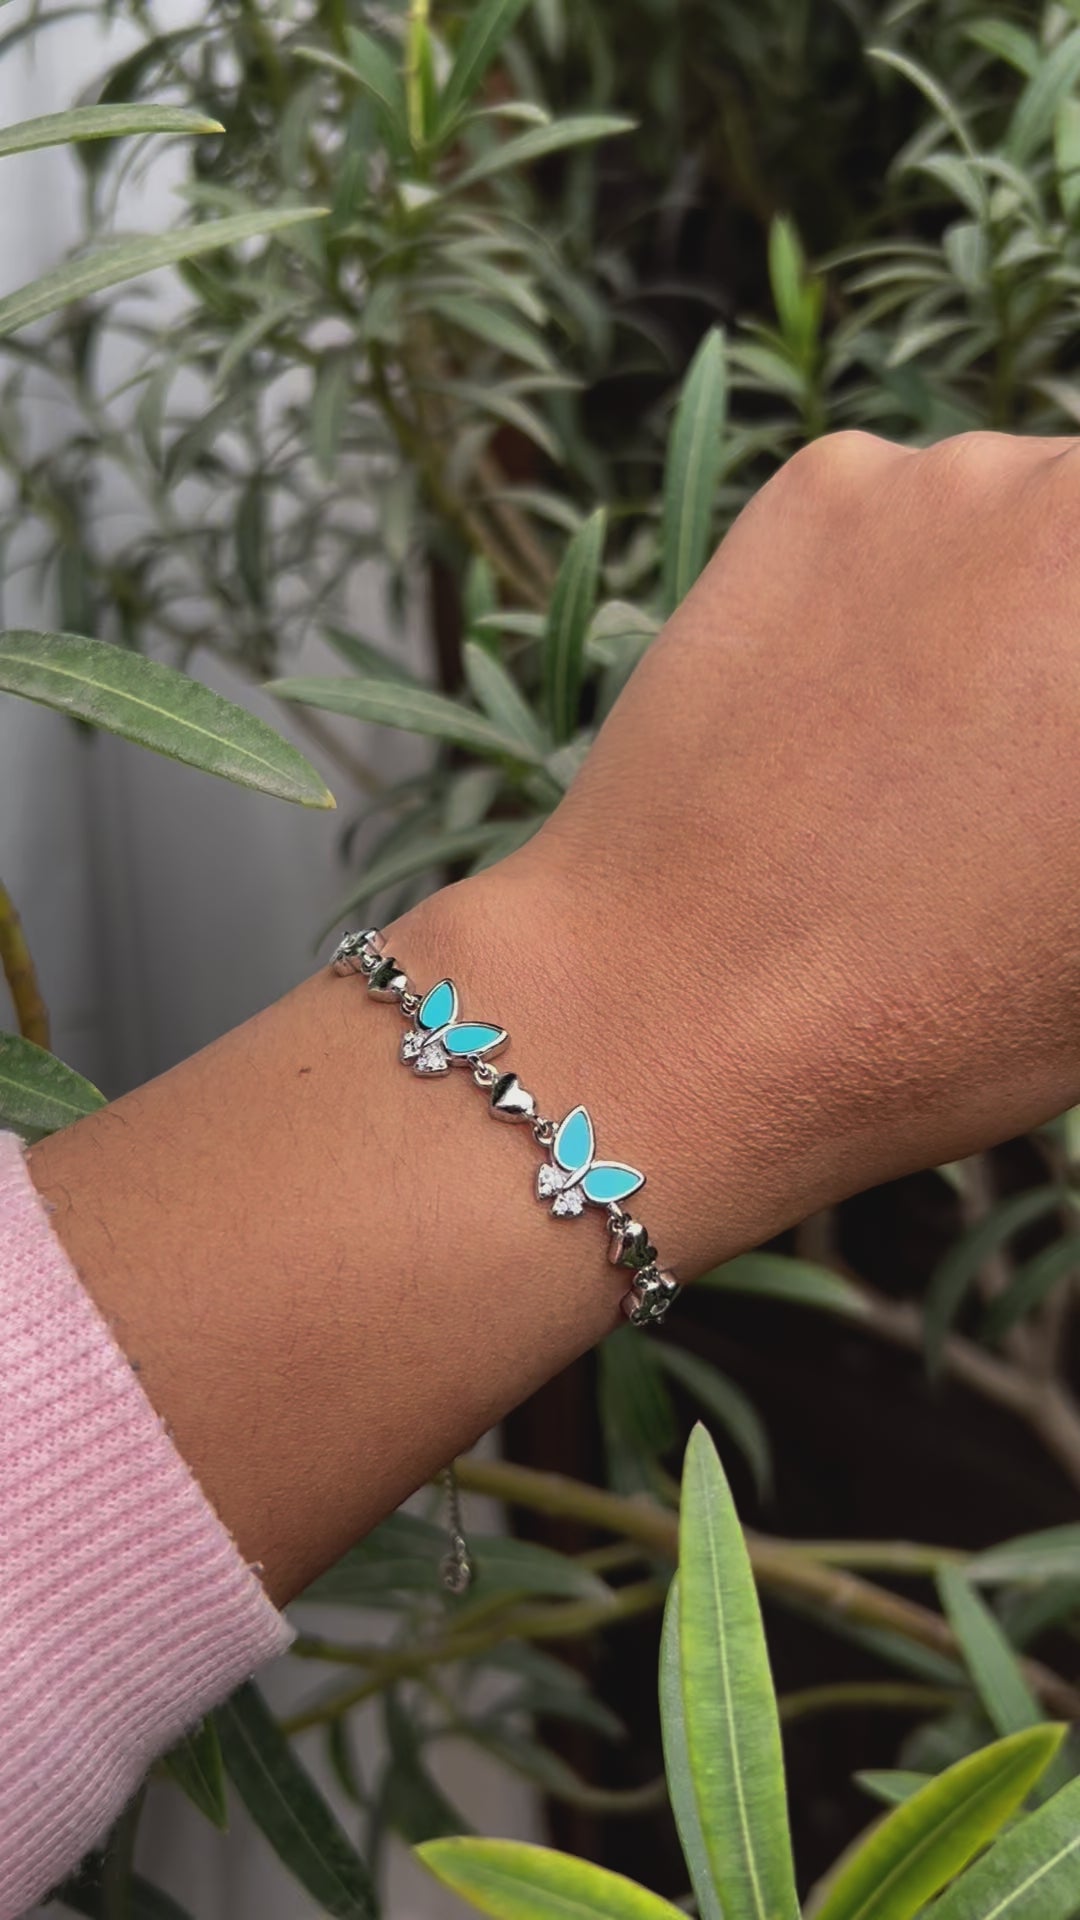 Shop Now Butterfly Design Silver Bracelet - Ornate Jewels